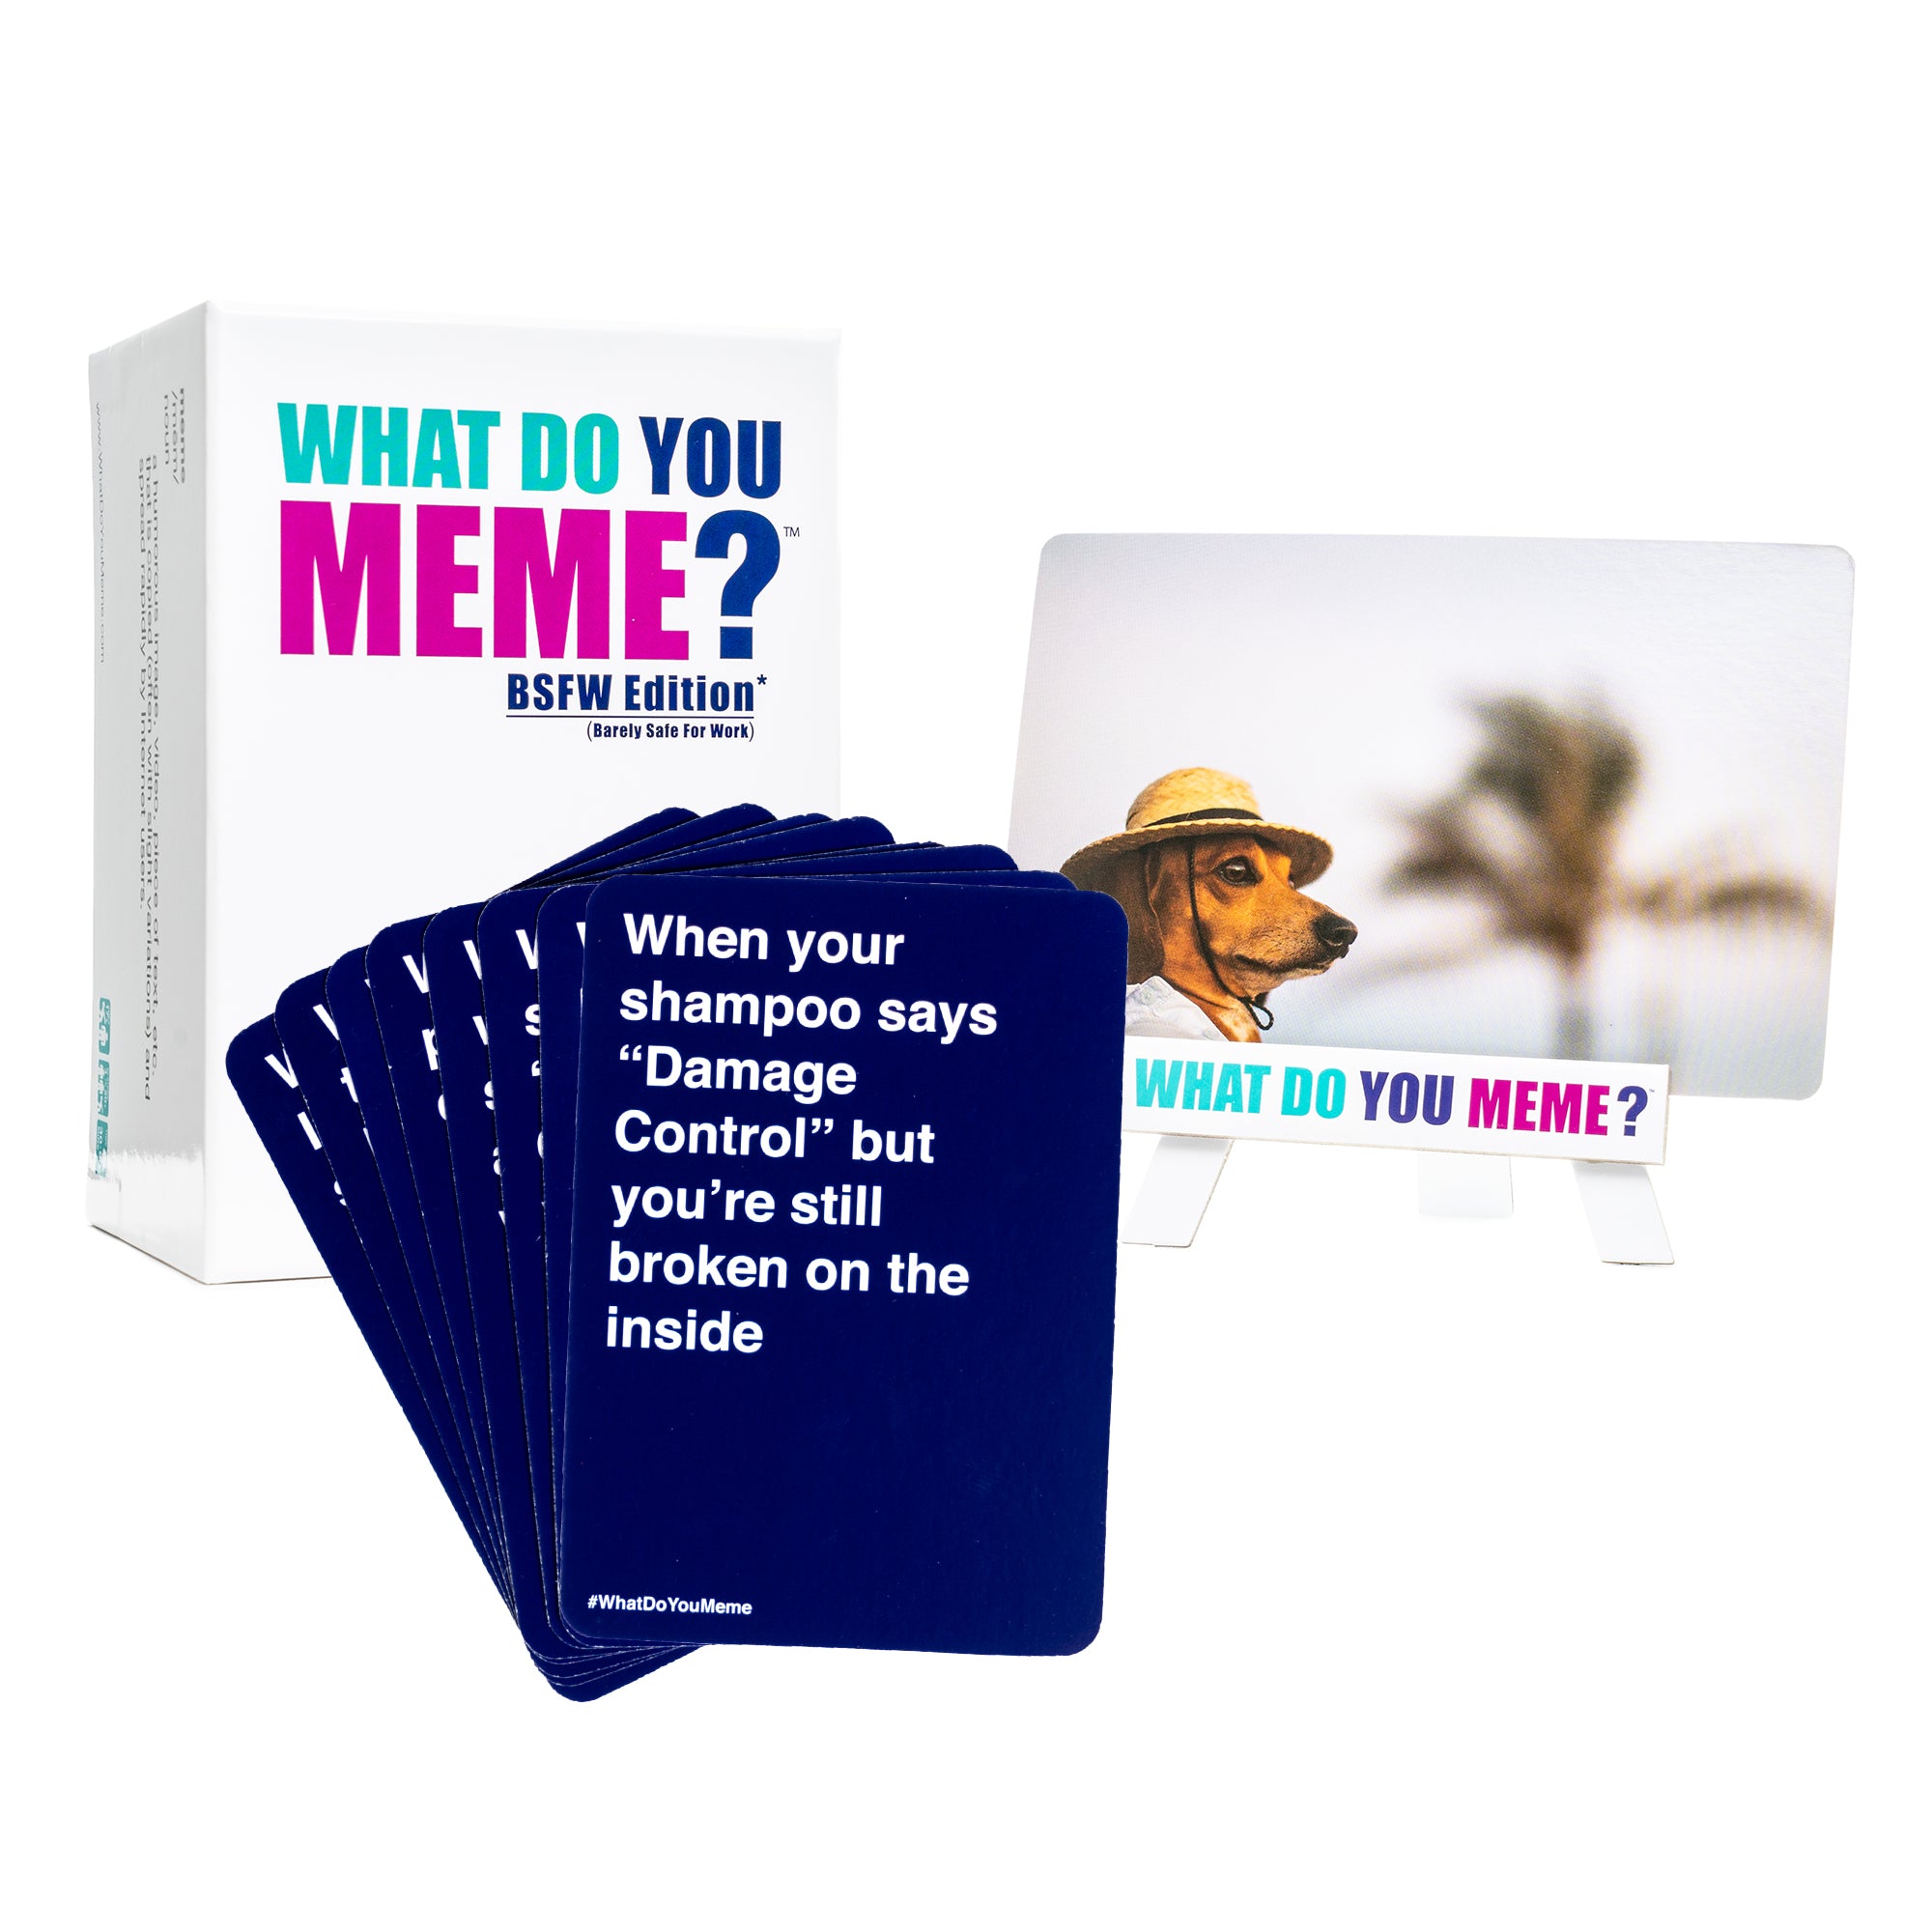 What Do You Meme?® (@whatdoyoumeme) • Instagram photos and videos